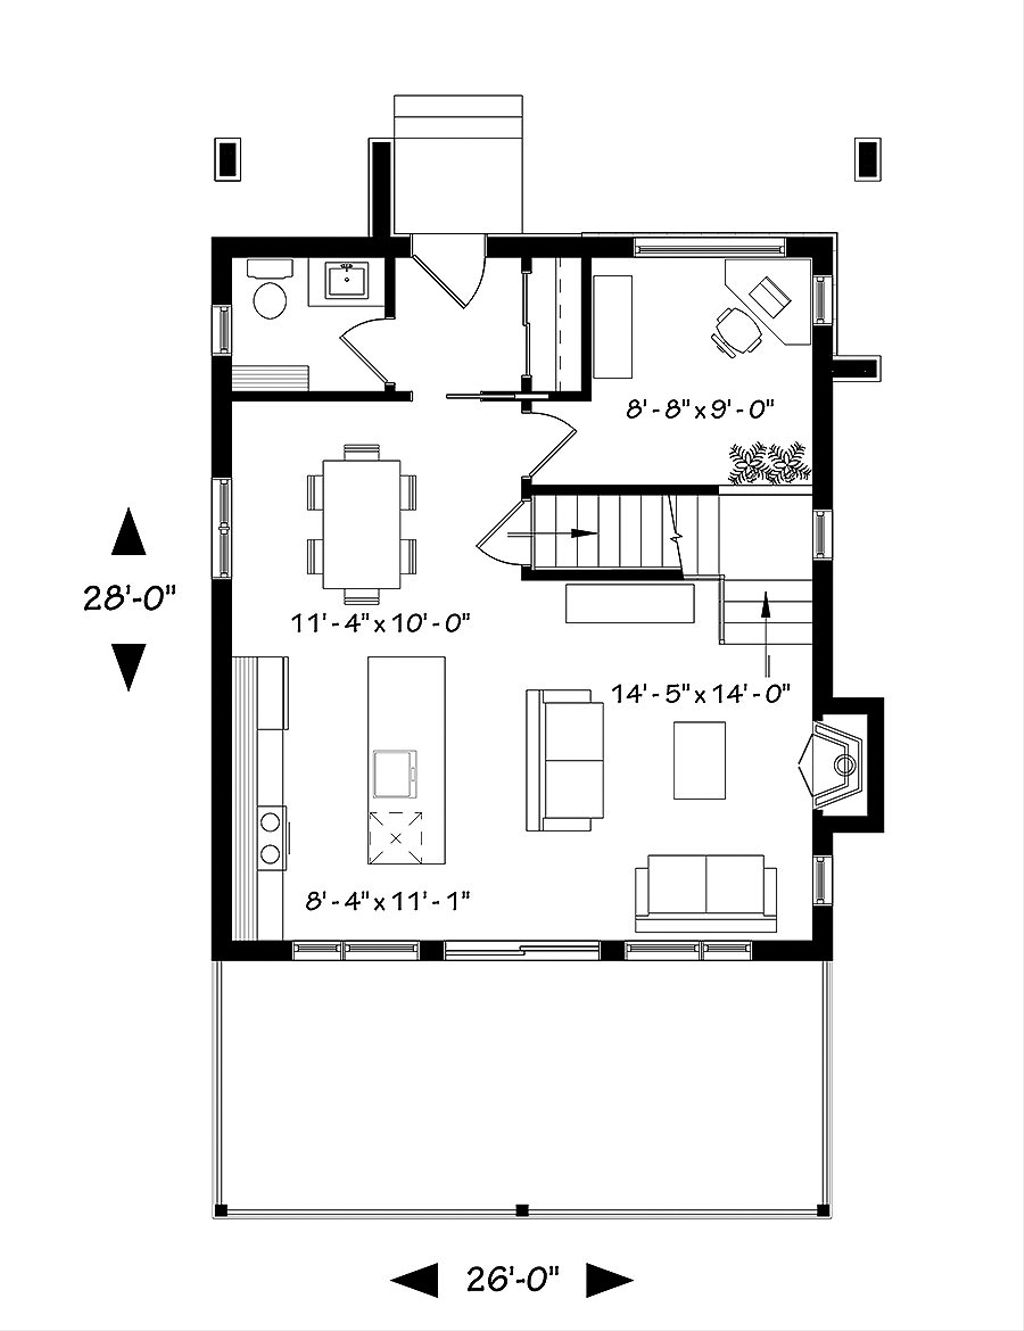 Contemporary Style House Plan 2 Beds 1 Baths 1344 Sq Ft Plan 23 2660 Builderhouseplans Com